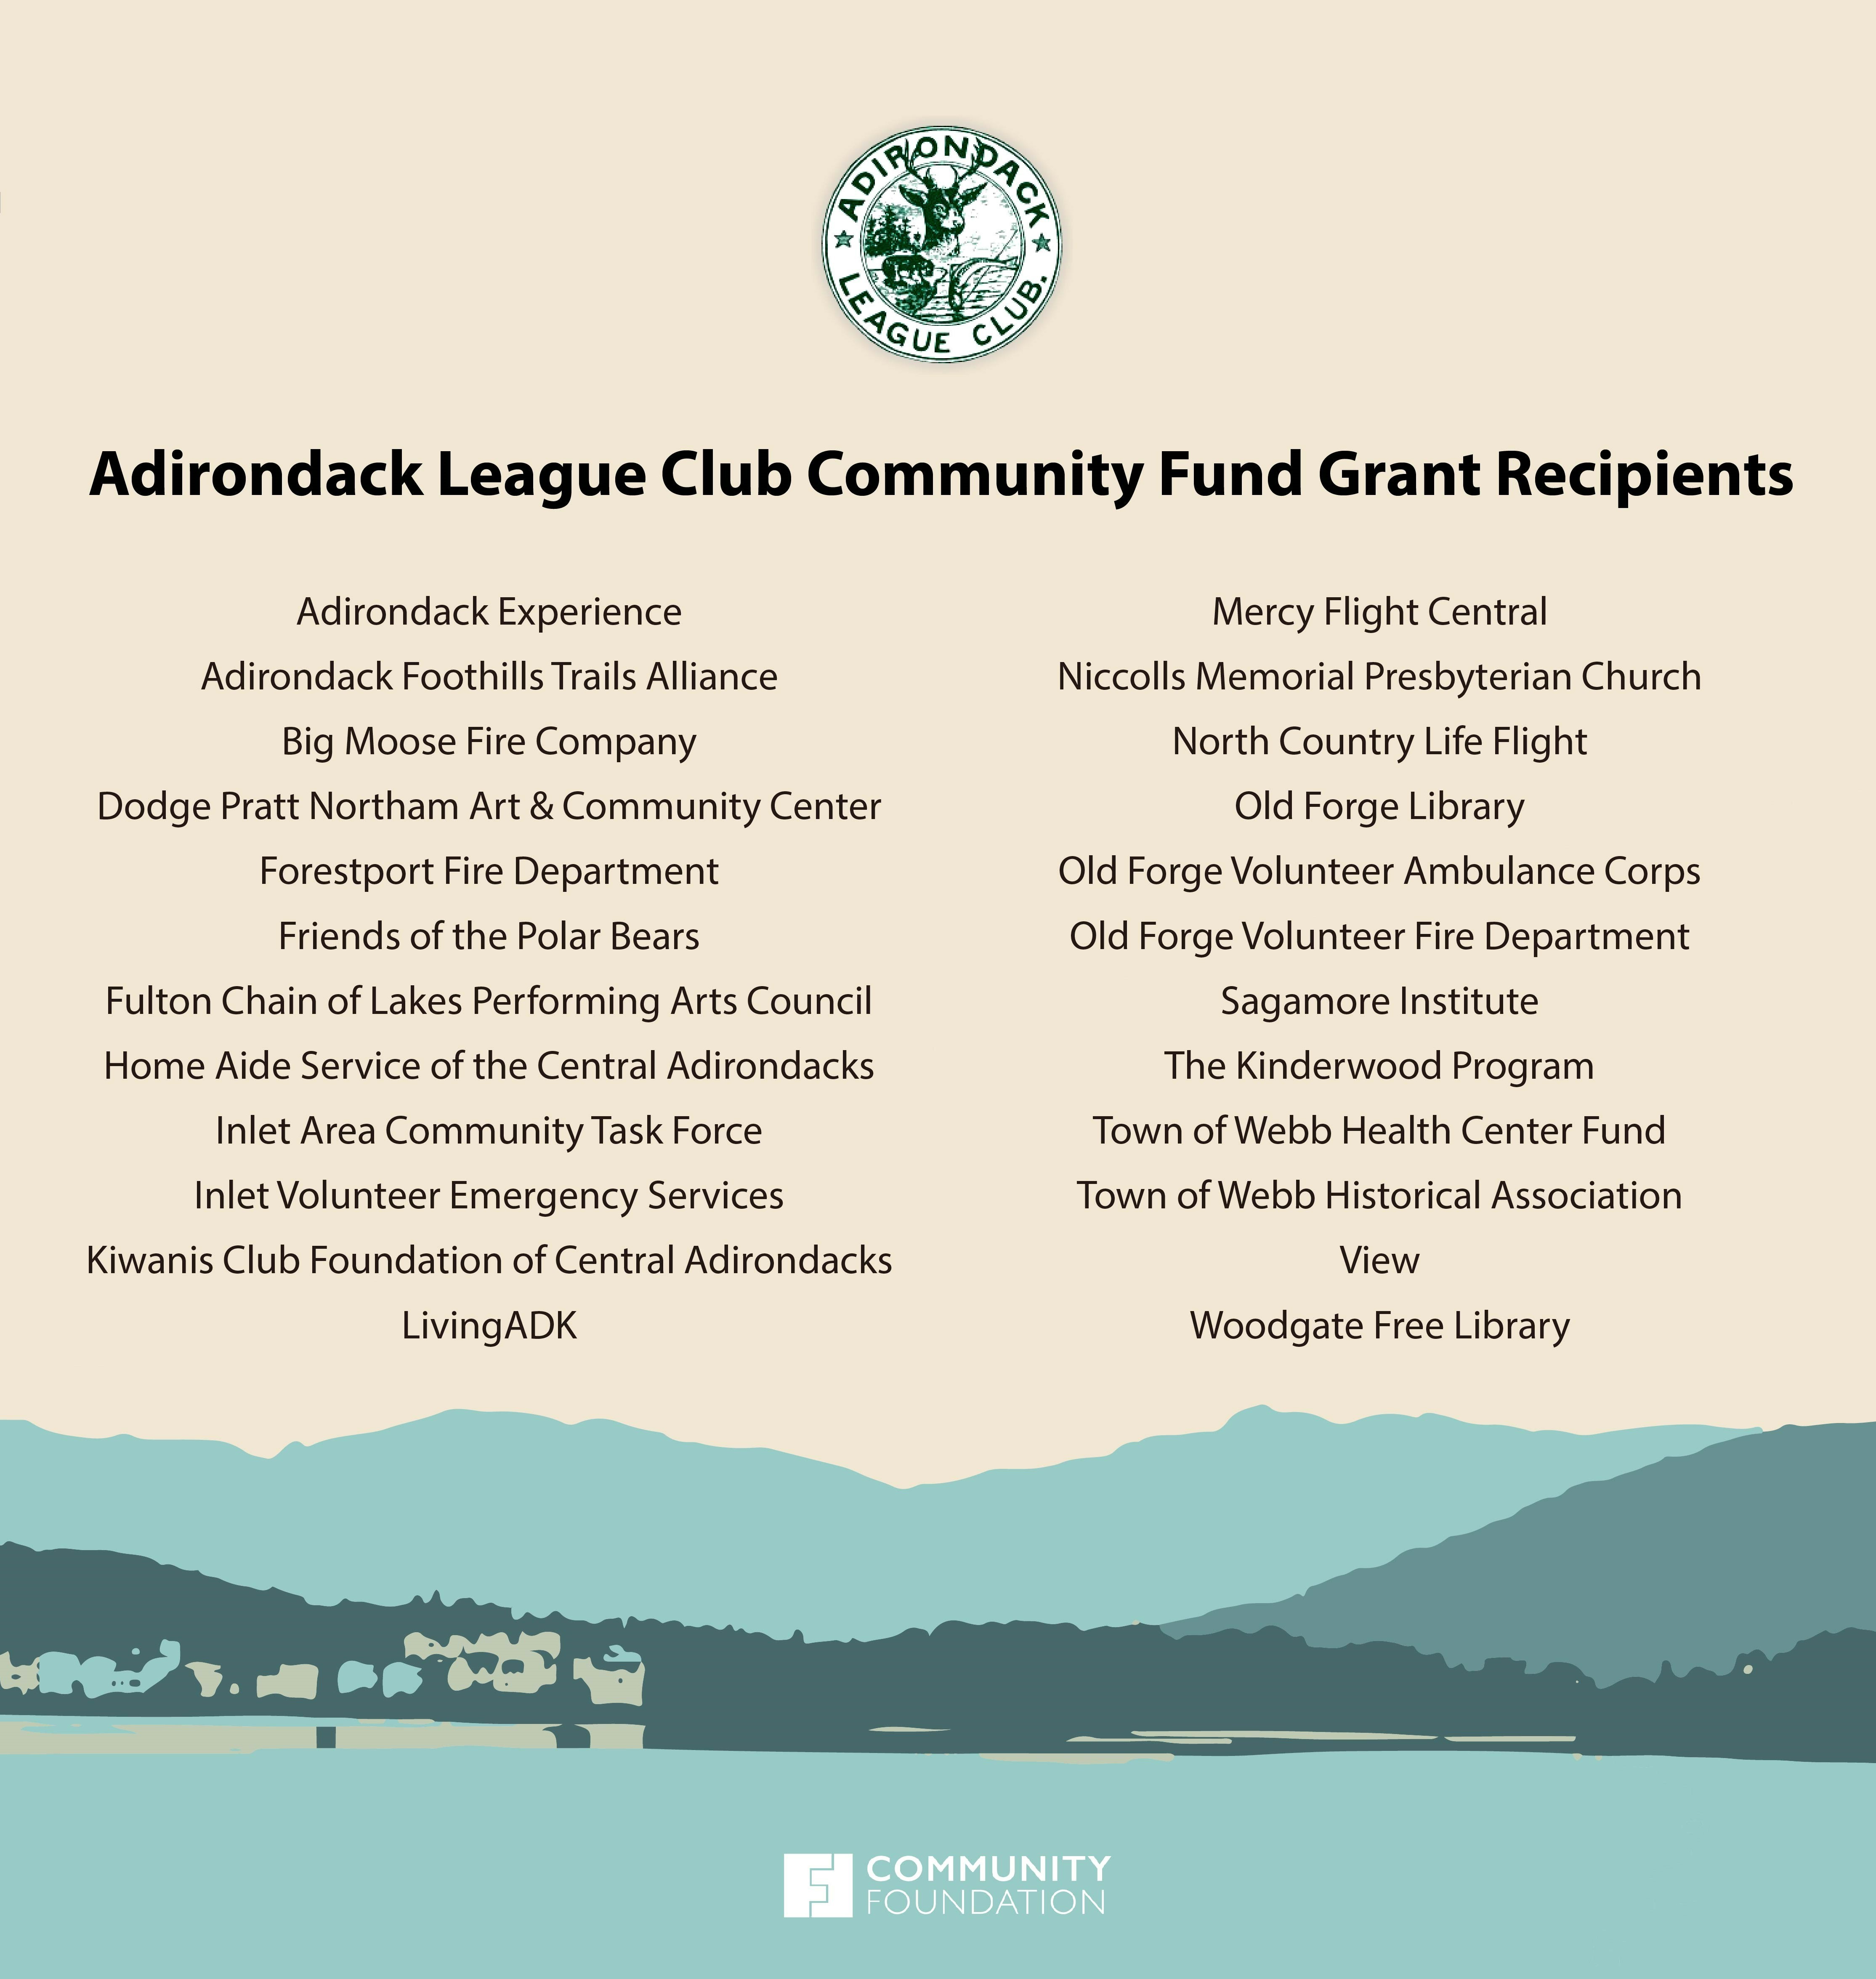 Adirondack League Club Awards Over $100,000 to Area Nonprofits